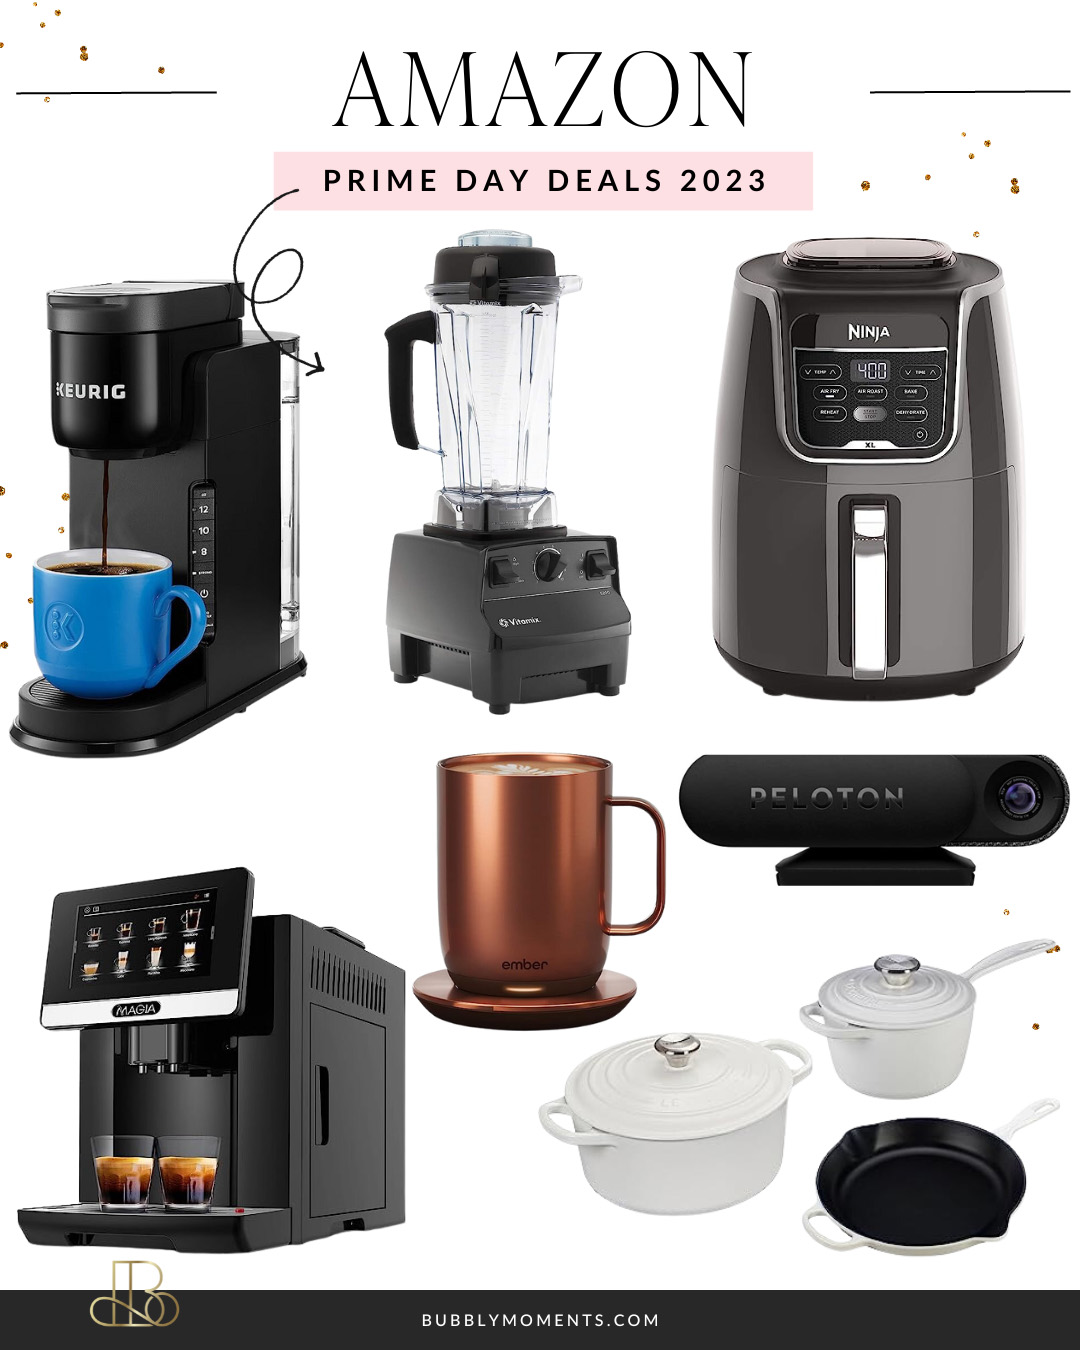 Amazon Prime Day Deals 2023 | Prime Day Deals 2023 | Amazon Prime 2023 | Amazon Deal Days 2023